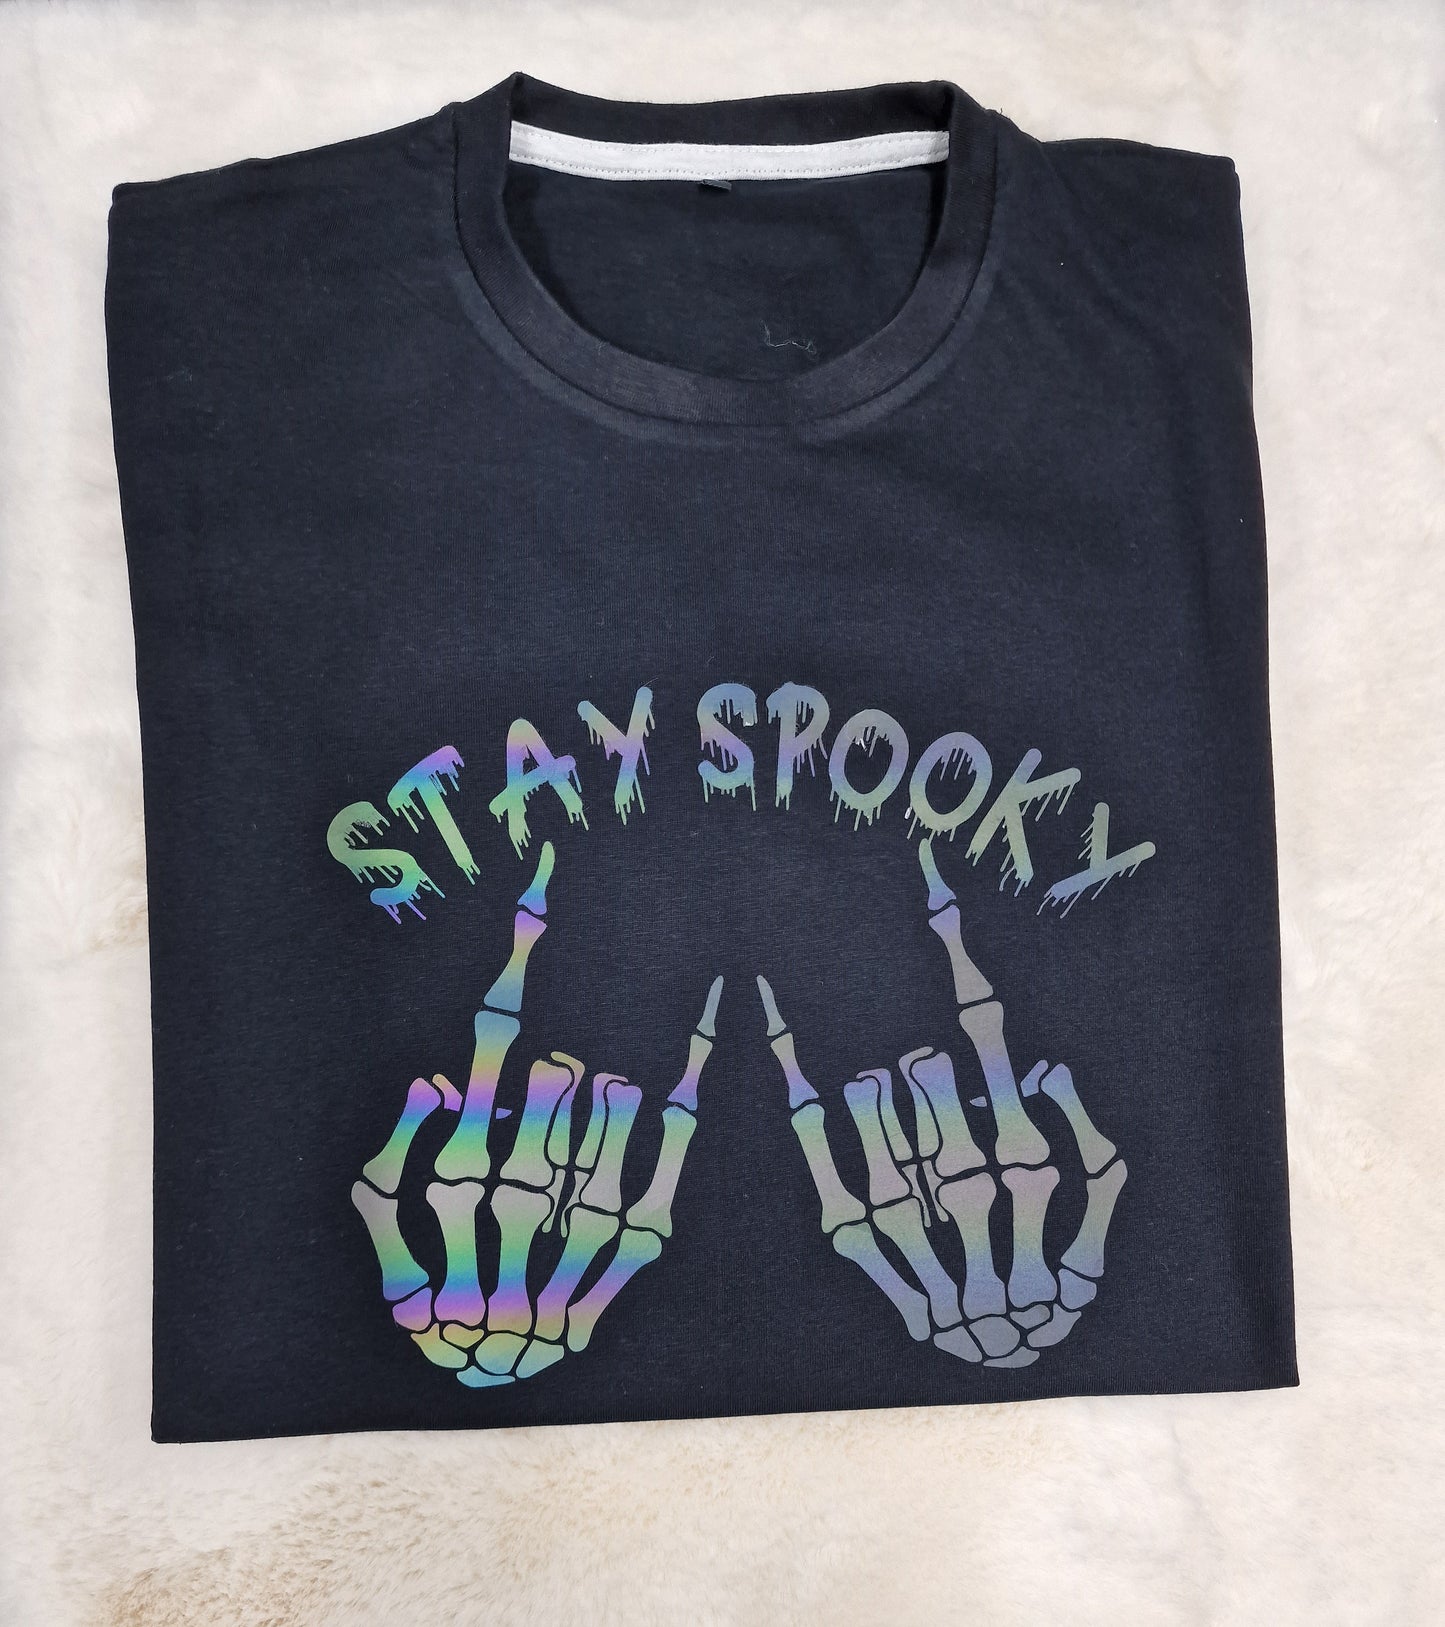 Stay Spooky rainbow reflective T-shirt